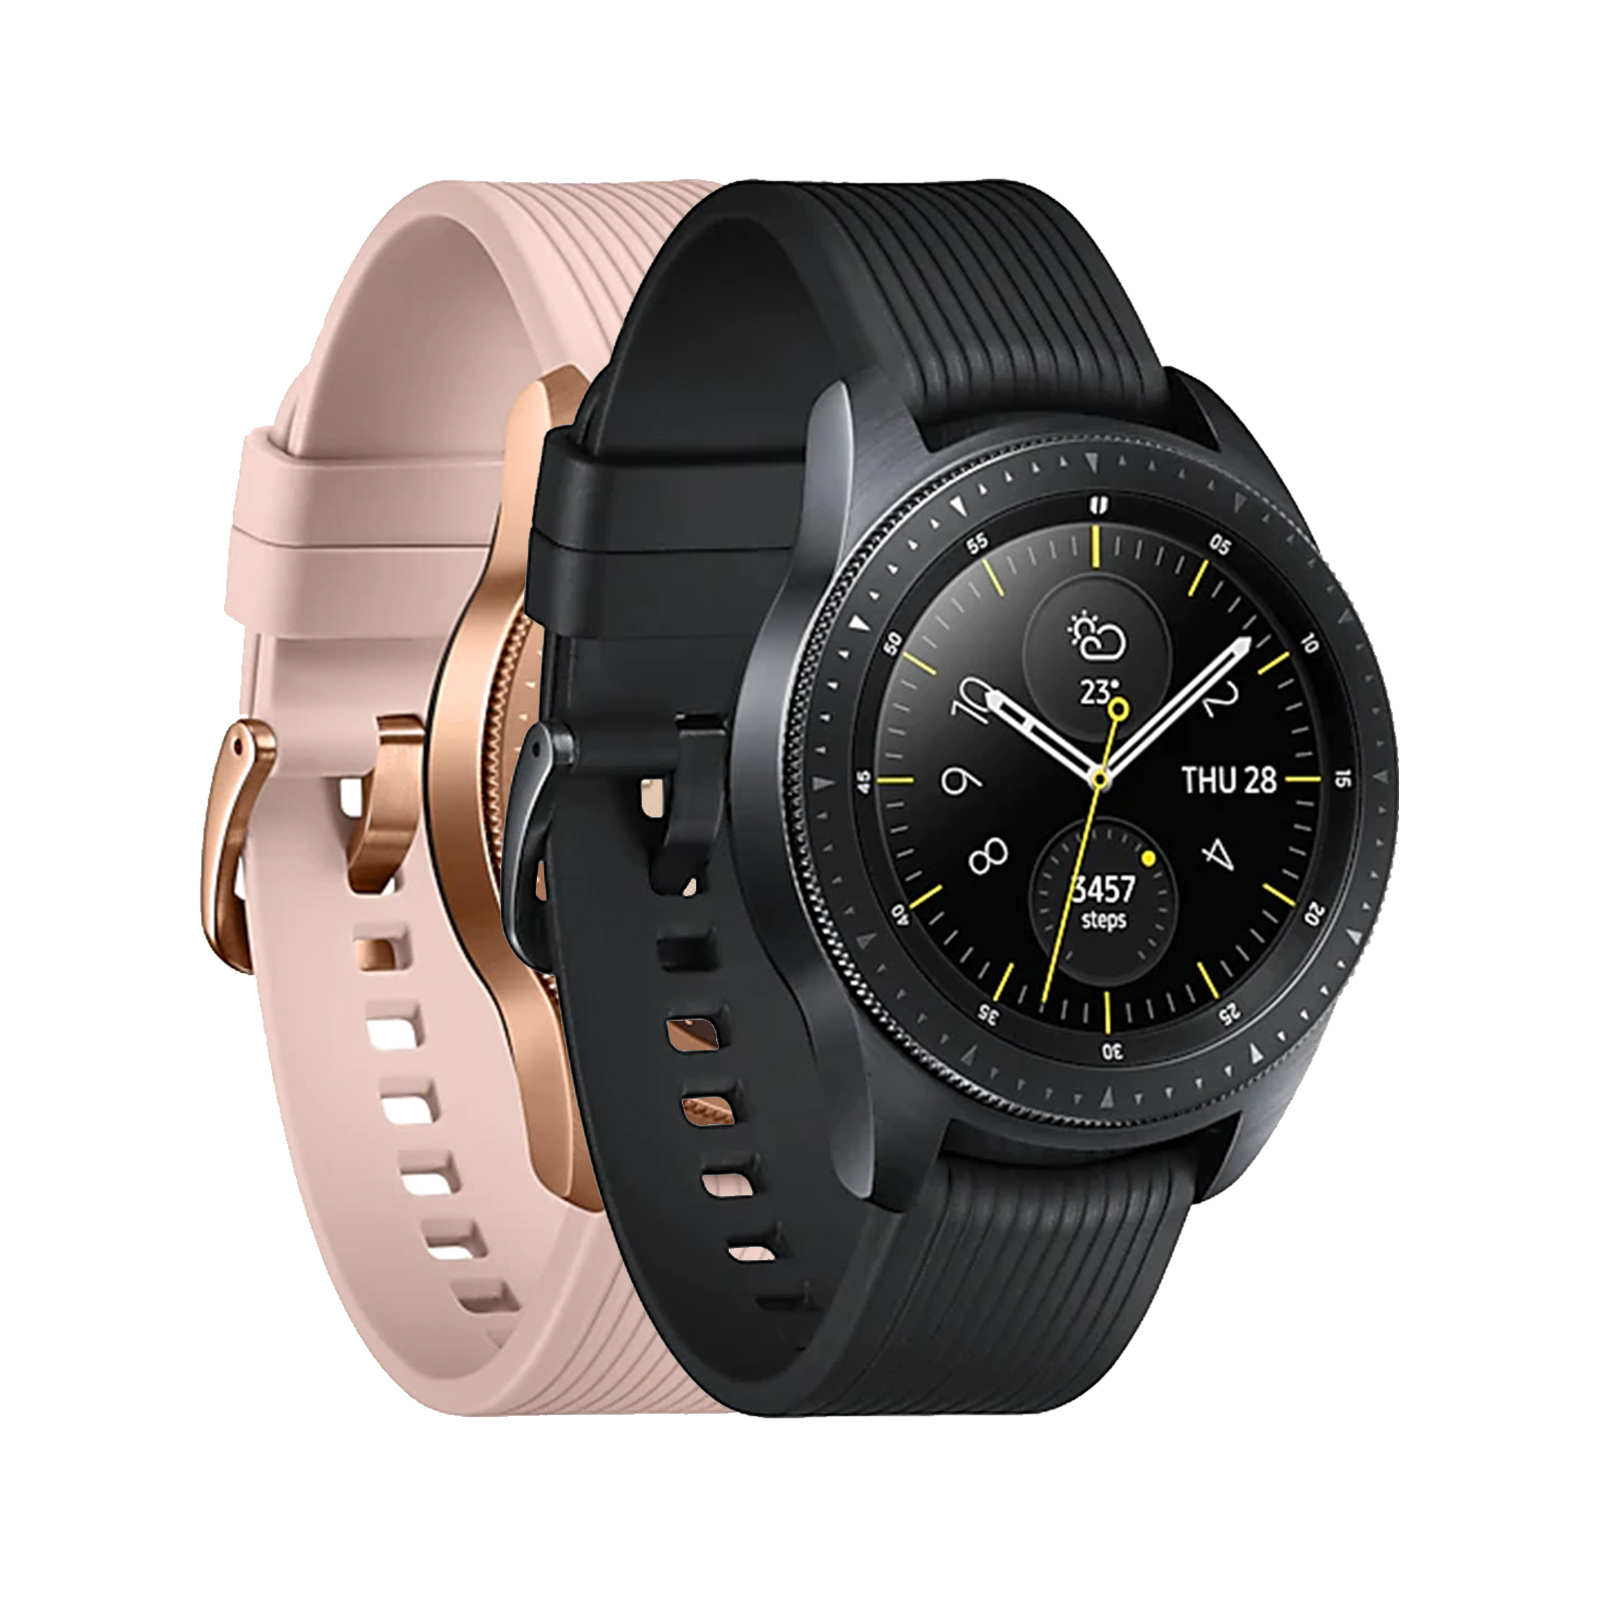 Samsung Galaxy Watch 42mm - Good Condition